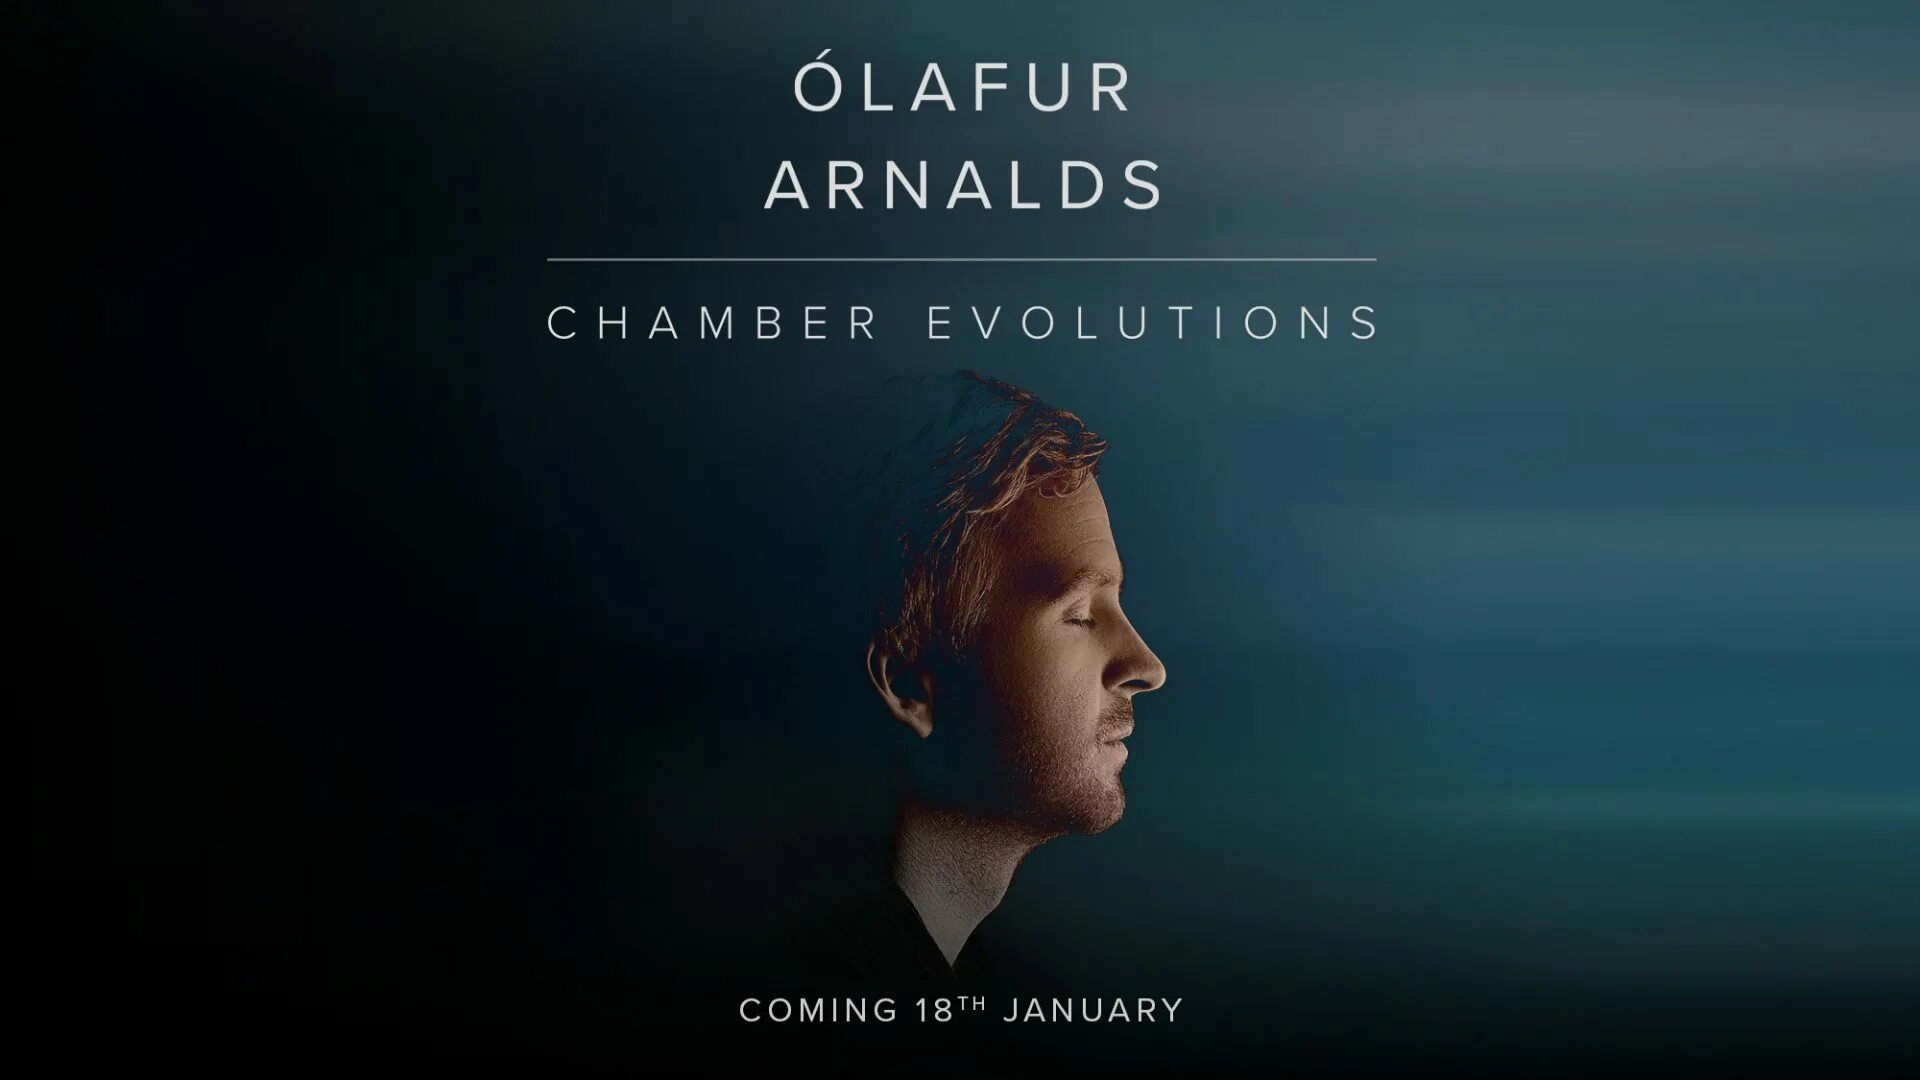 Arriving 18. Олафур Арналдс. Spitfire Audio - Olafur Arnalds Chamber Evolutions. Spitfire Audio - Olafur Arnalds Stratus. Олафур Эллисон ar.